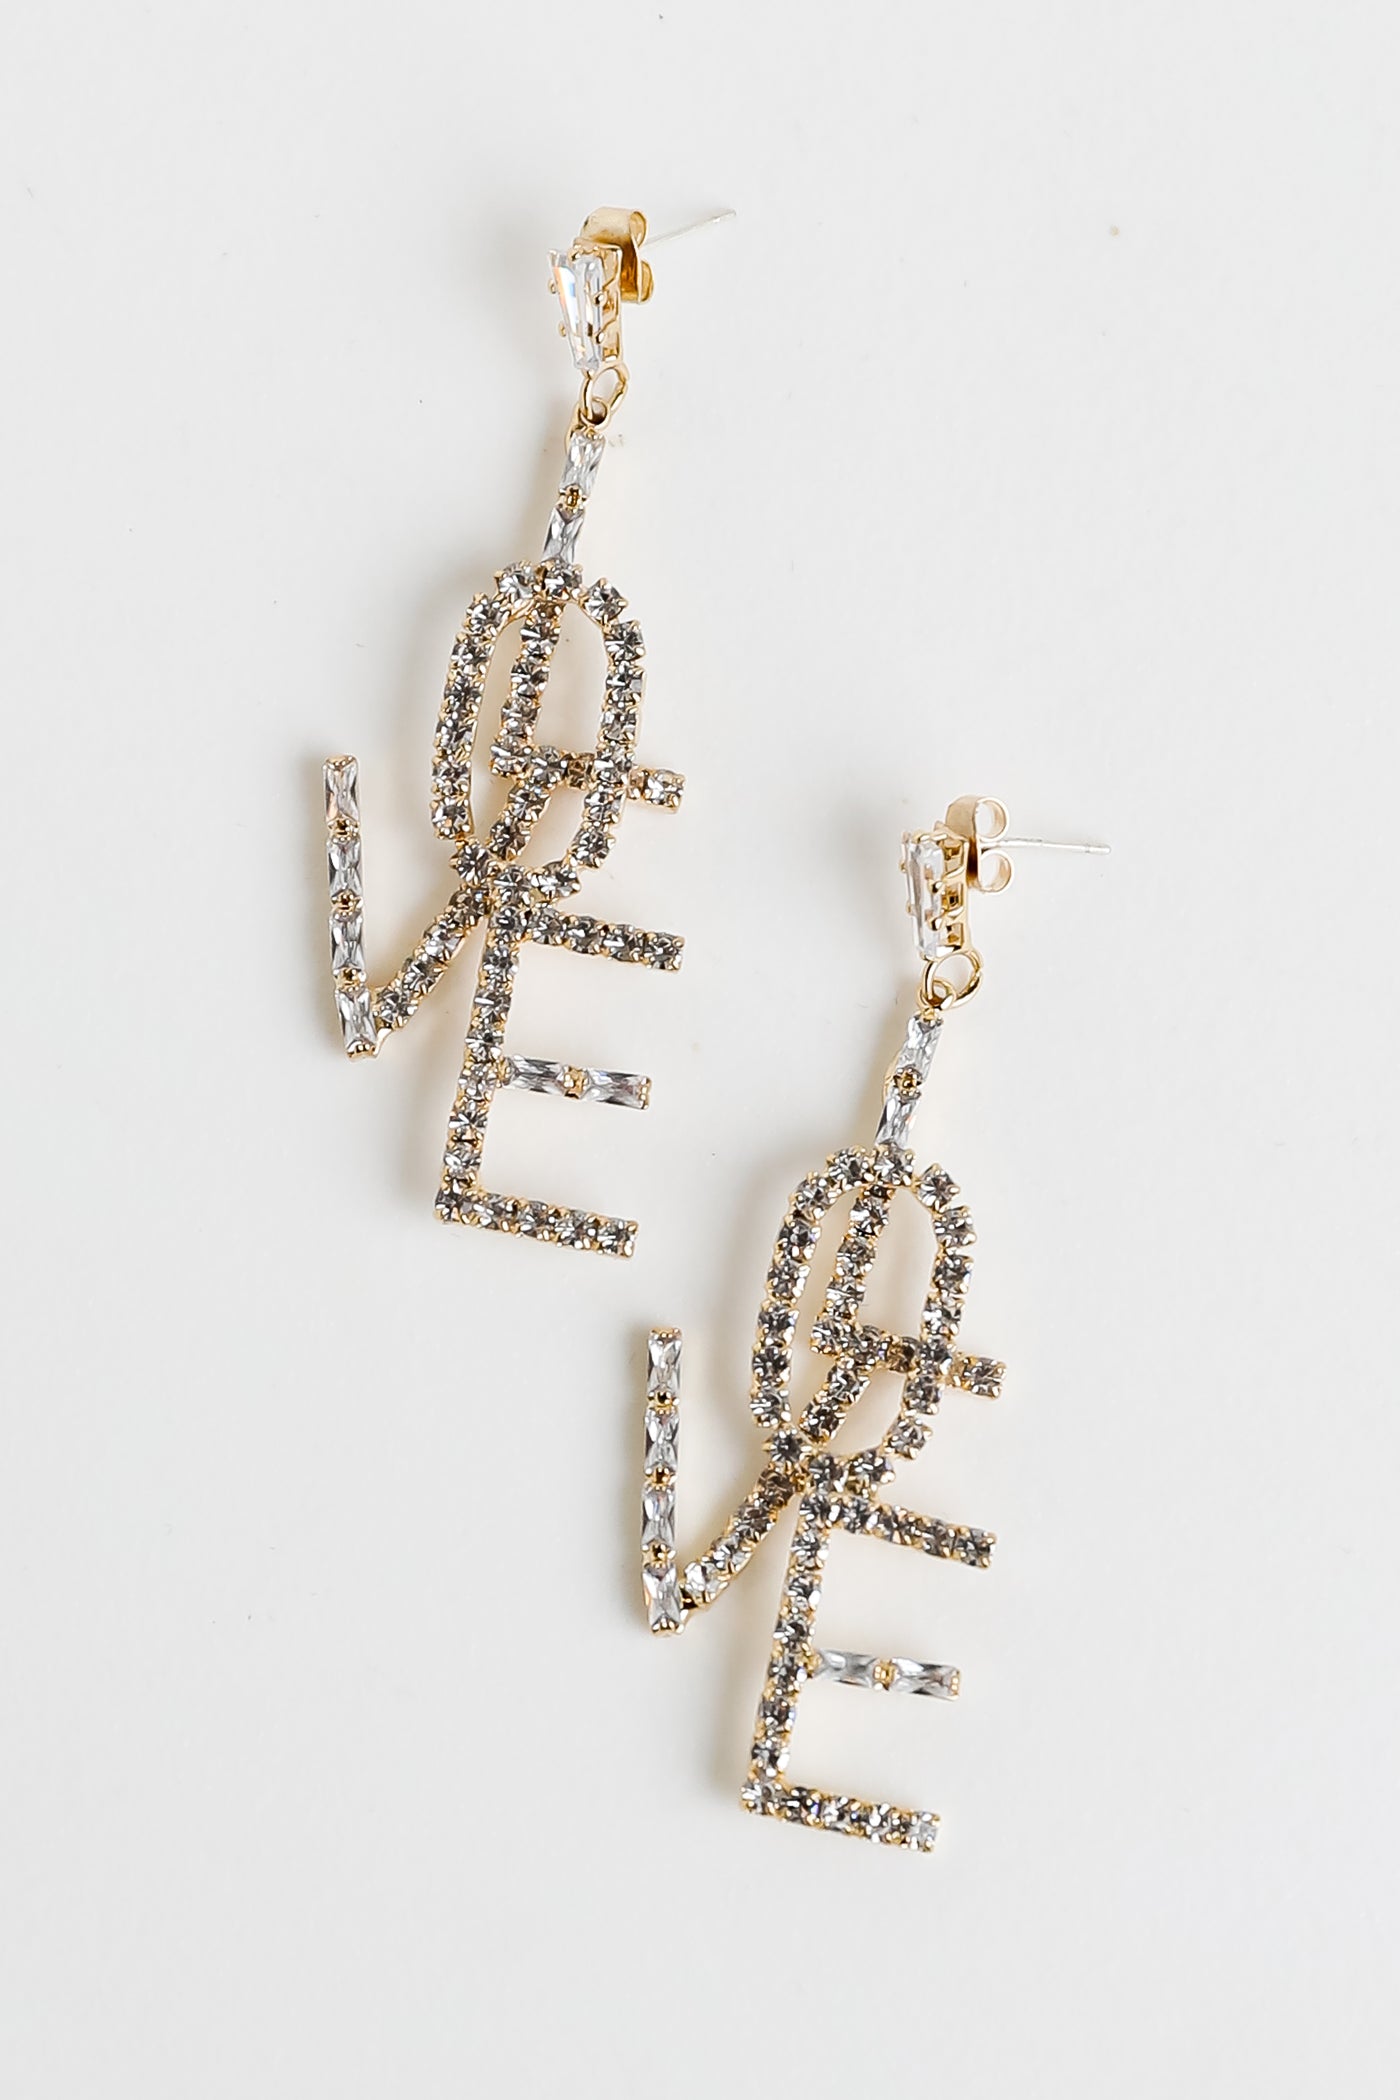 CHANEL VINTAGE JEWELRY Gold-Plated Word Drop Earrings ($1,610) | Vintage  chanel jewelry, Vintage jewelry, Vintage drop earrings